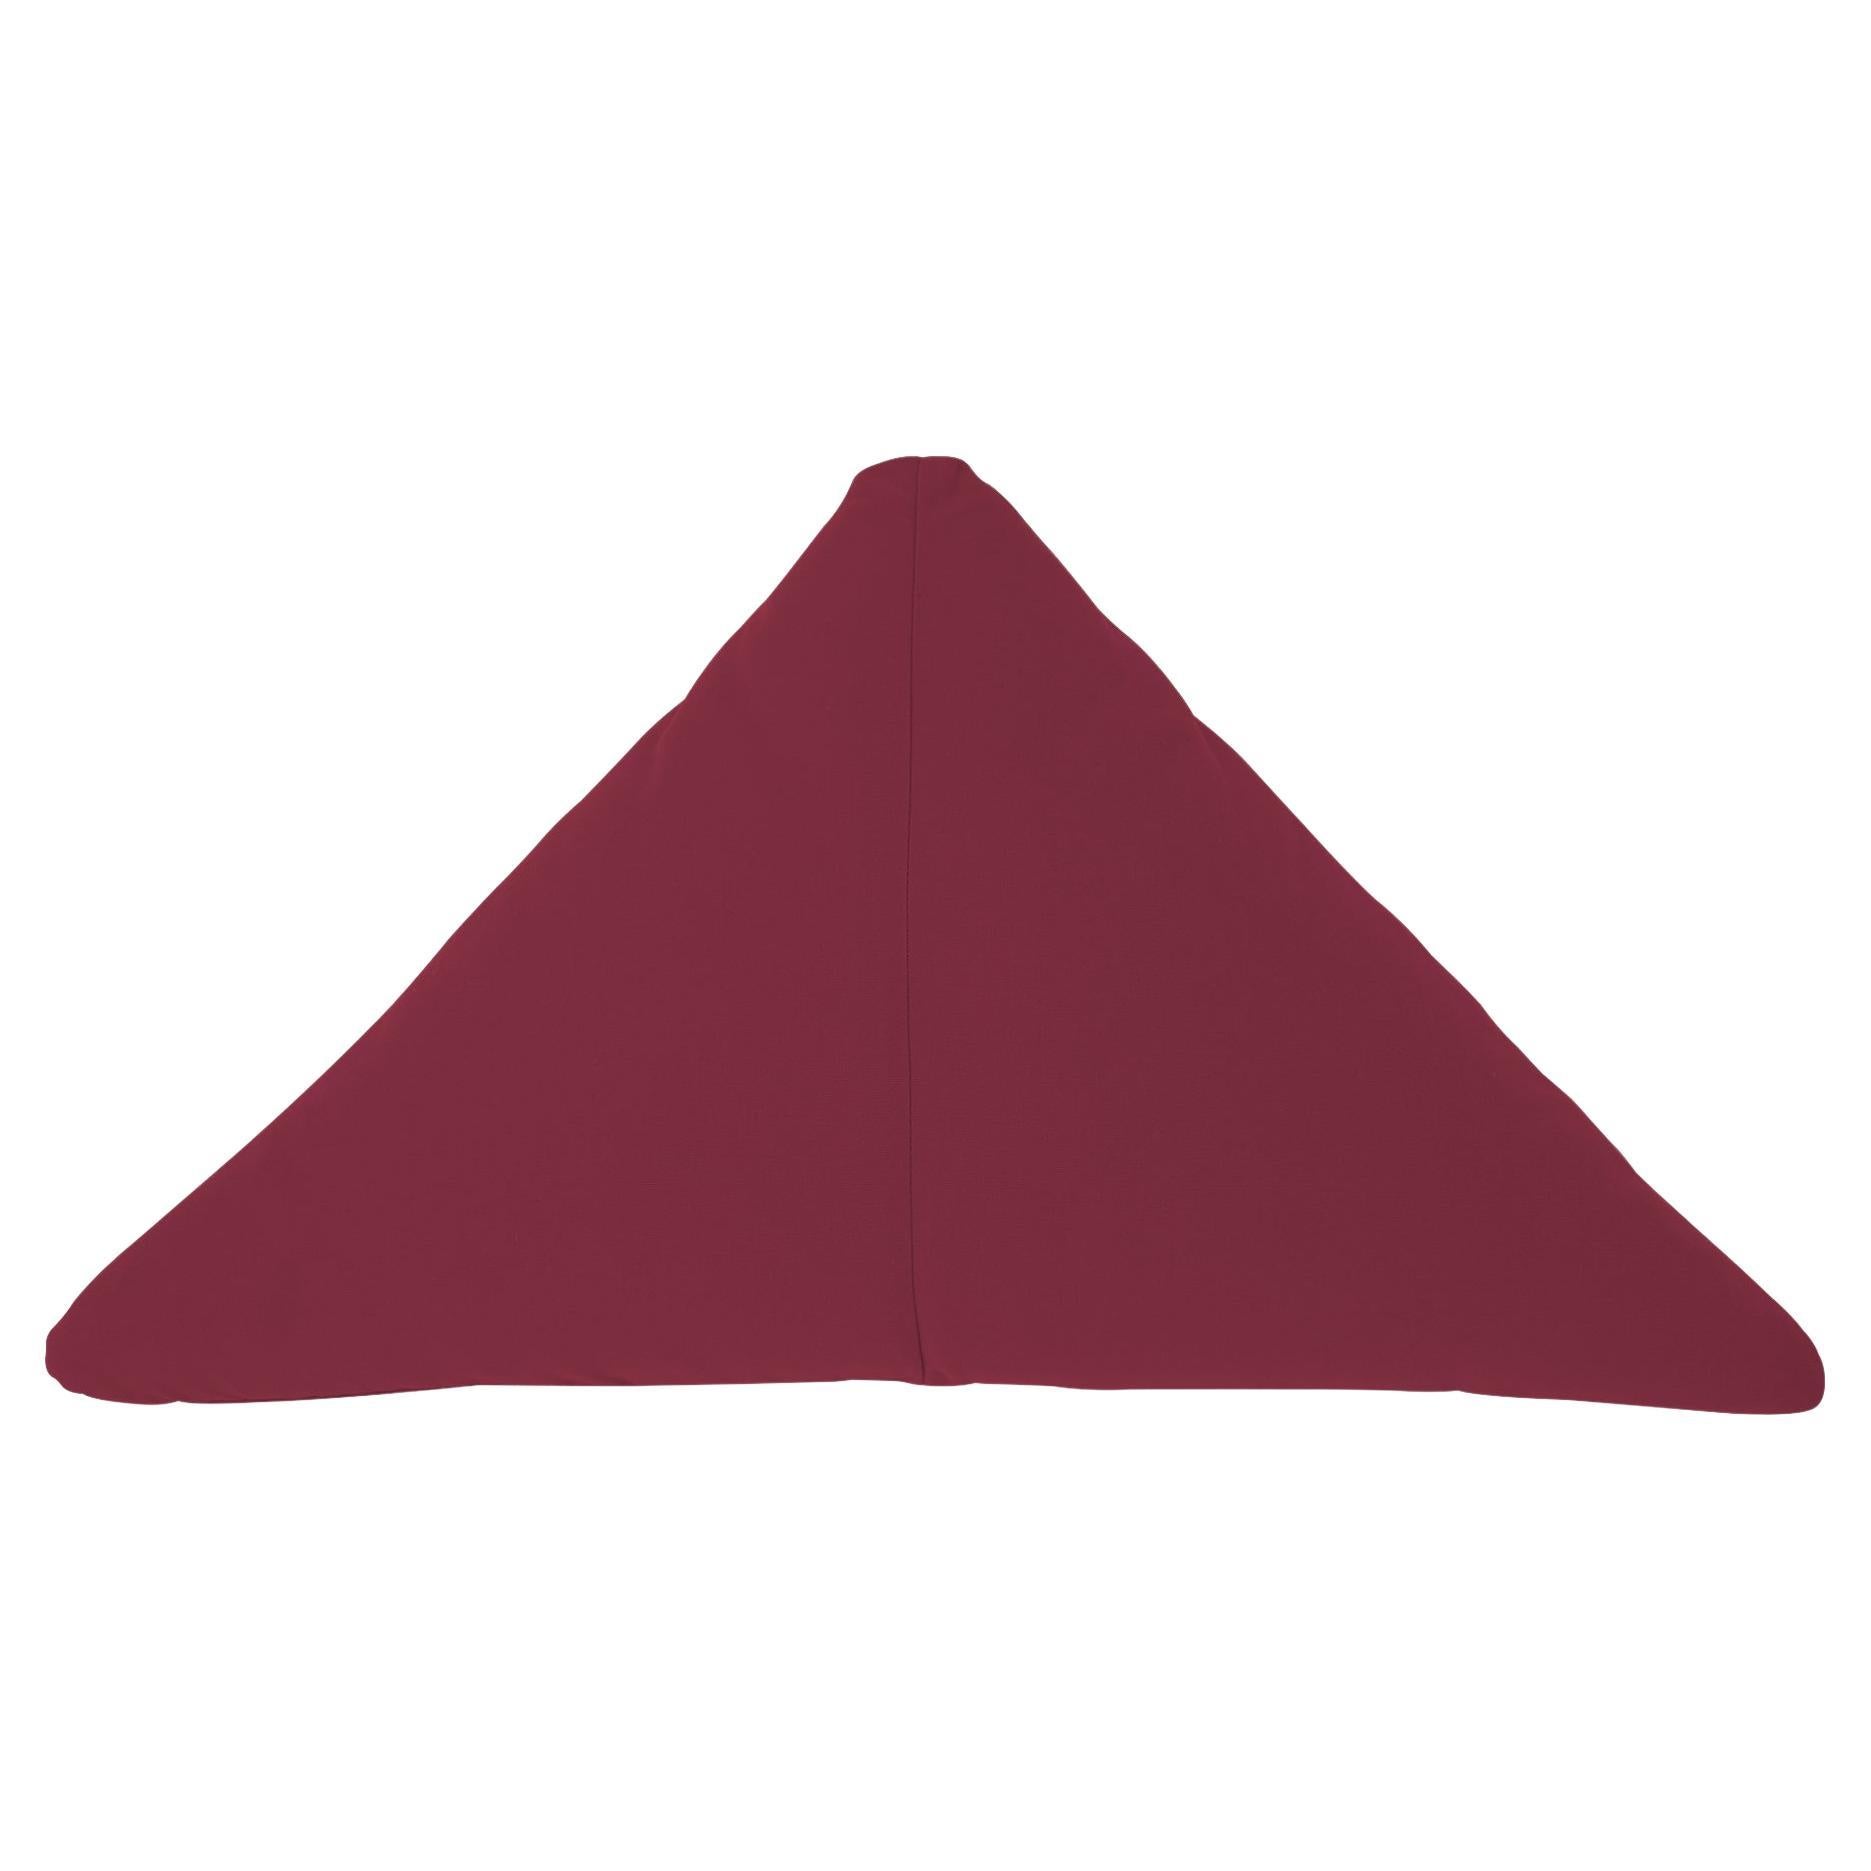 Bend Goods - Triangle Throw Pillow in Burgundy Sunbrella